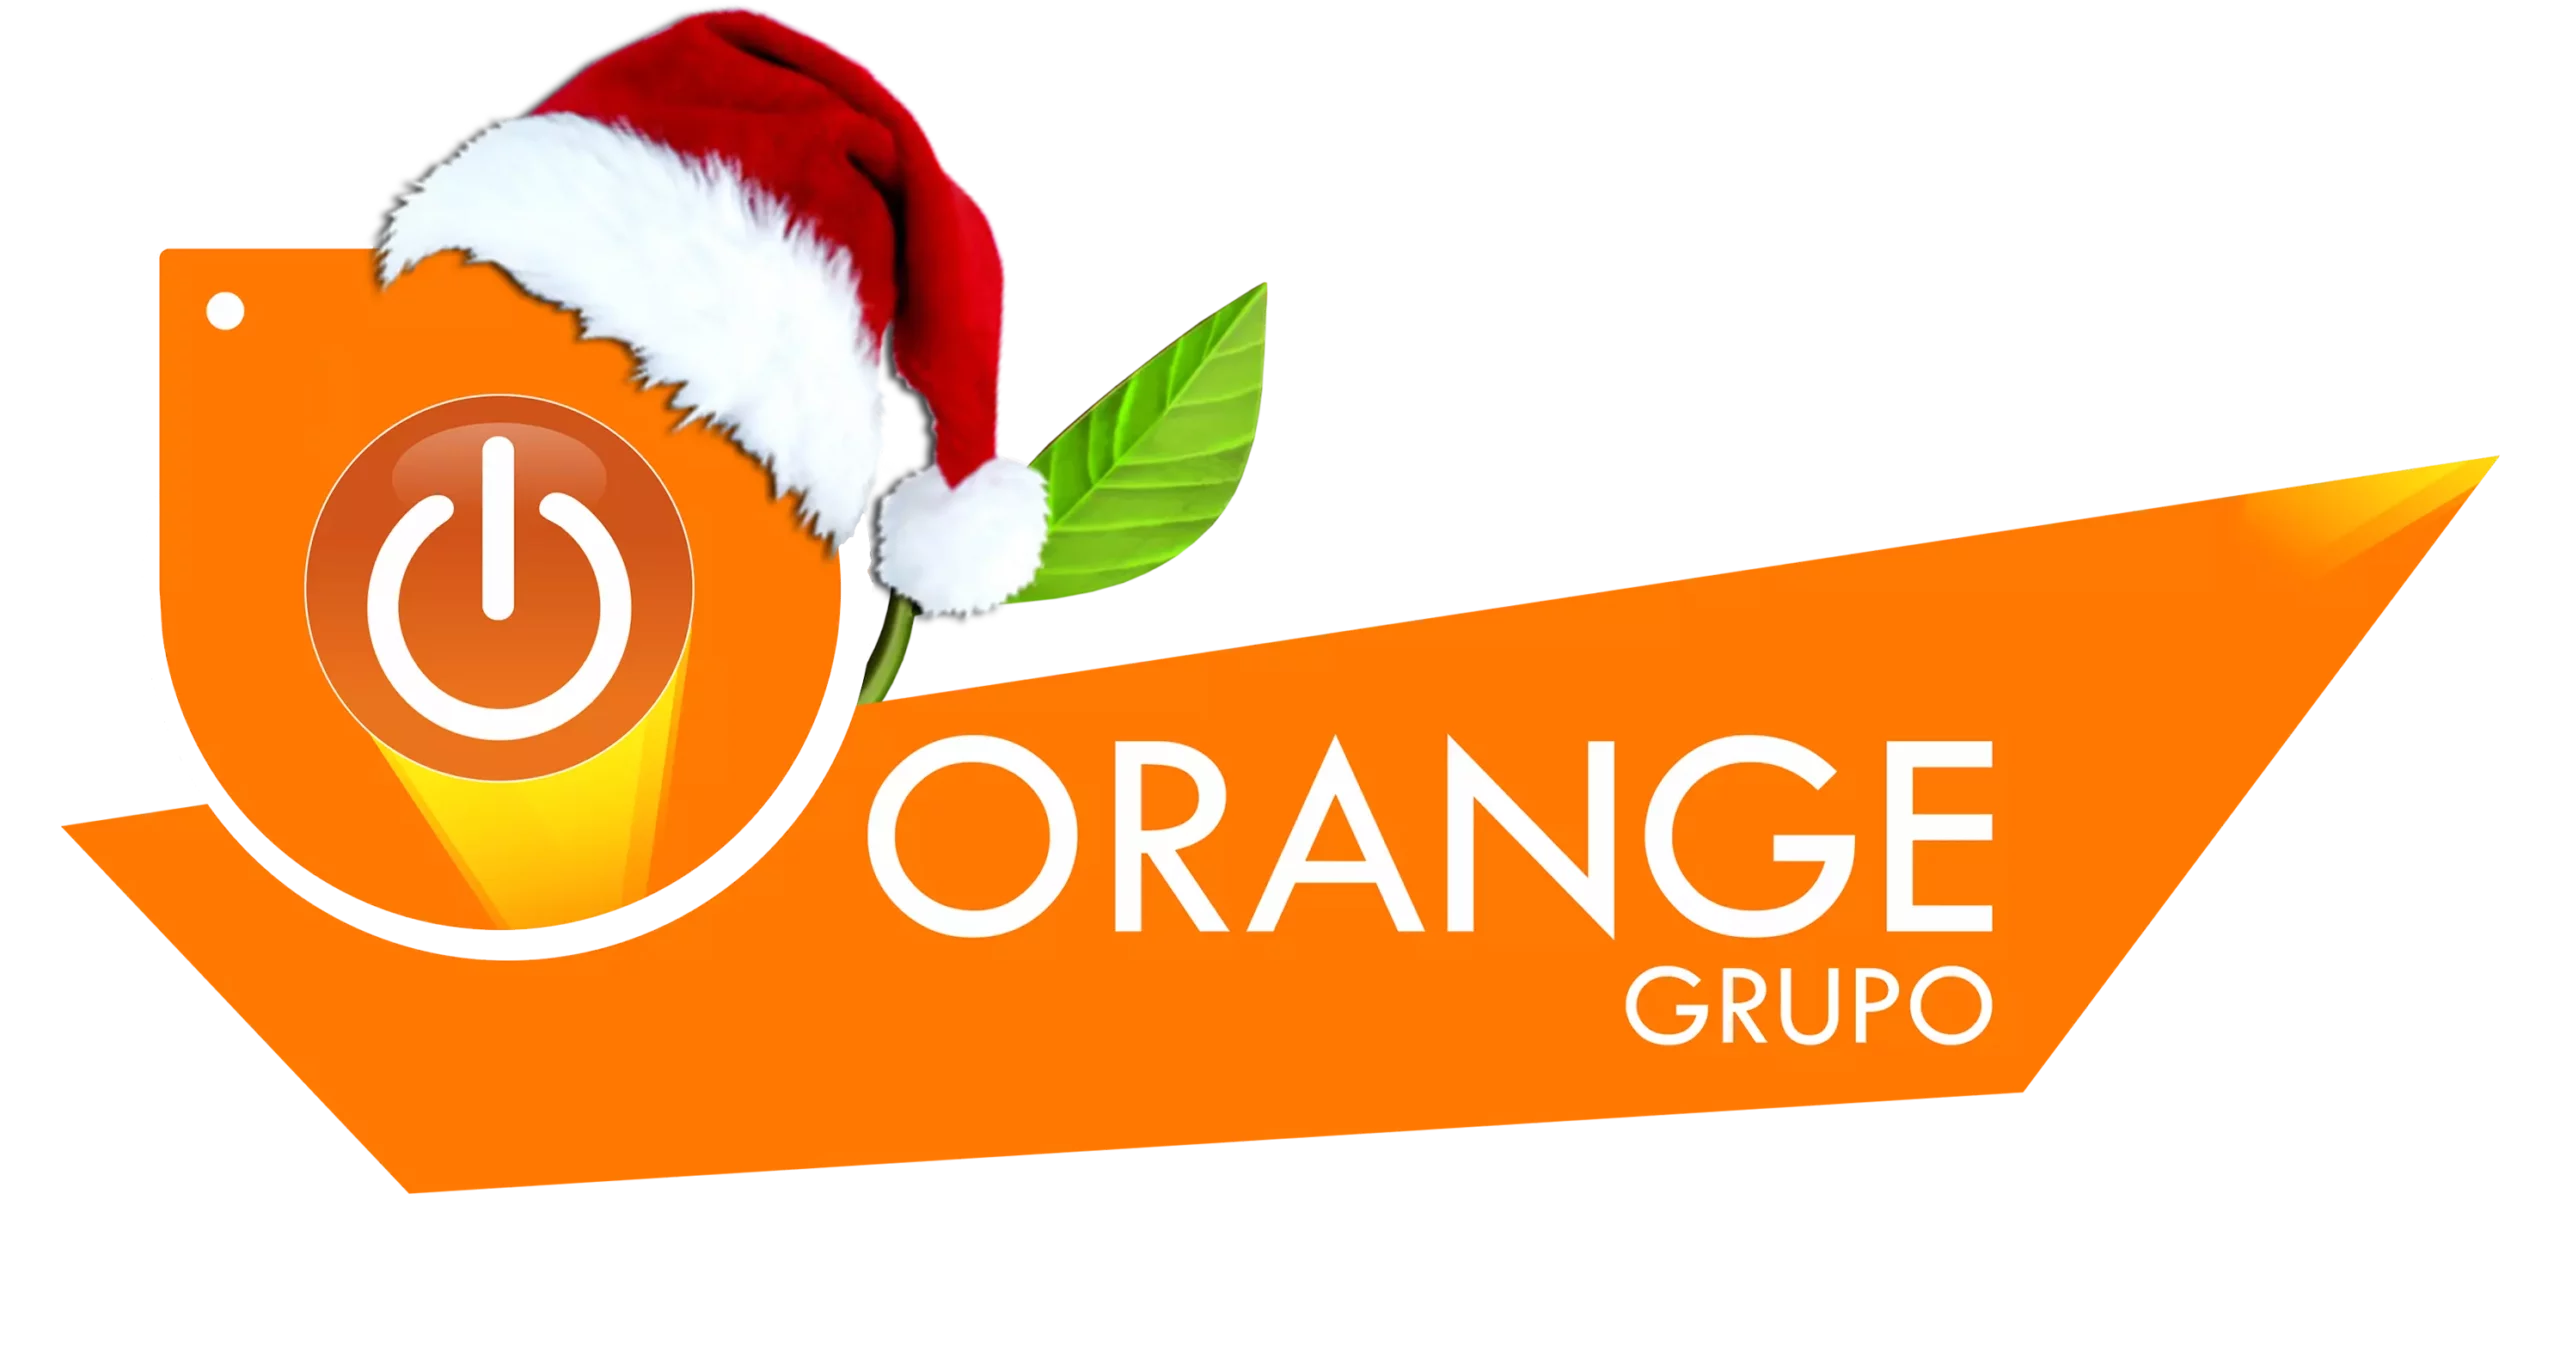 Grupo Orange